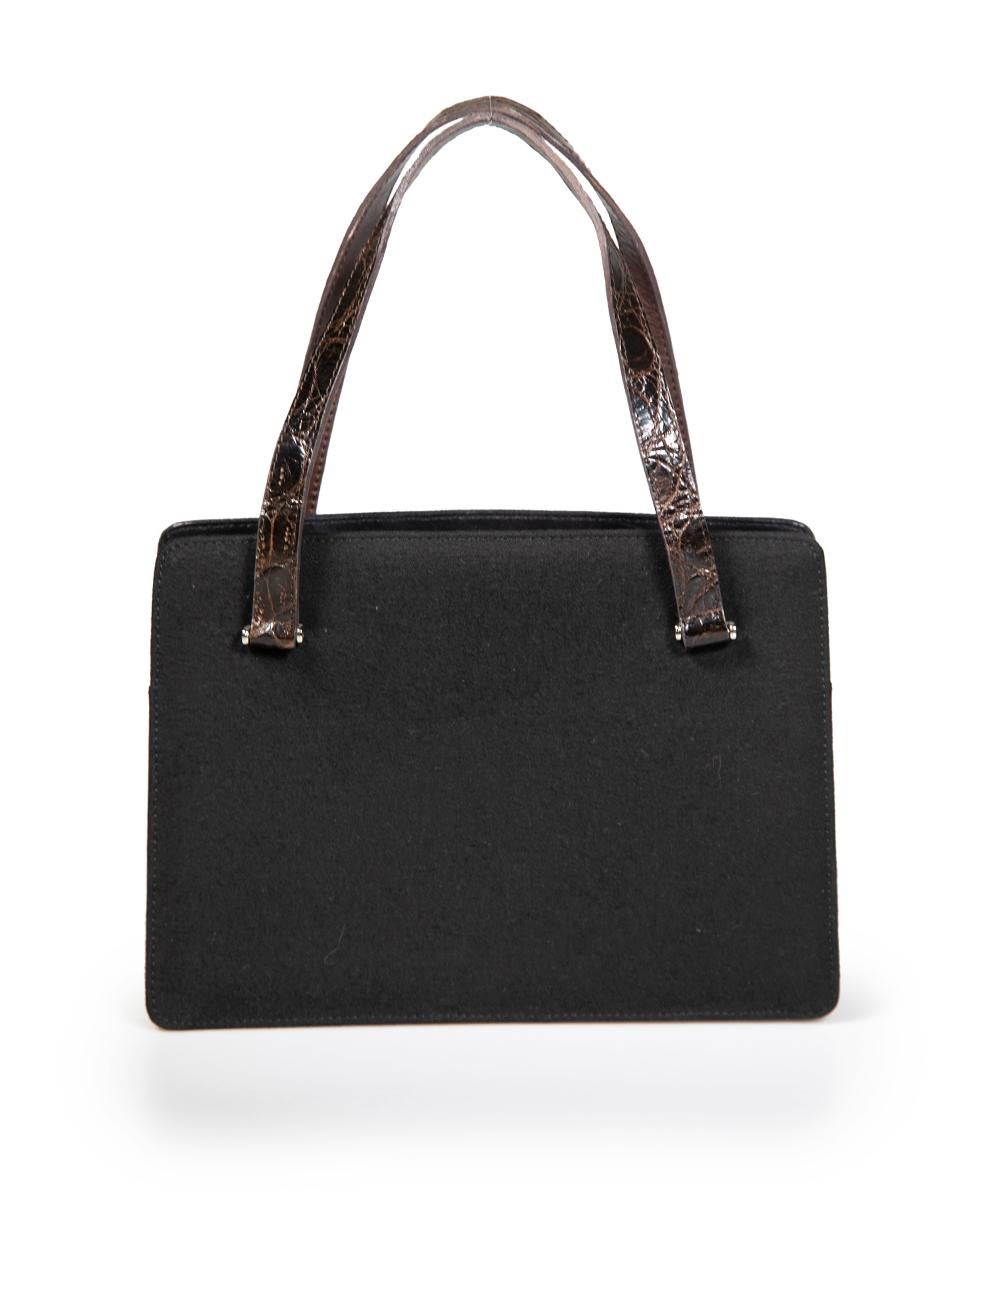 Jimmy Choo Vintage Black Mini Handbag In Good Condition For Sale In London, GB